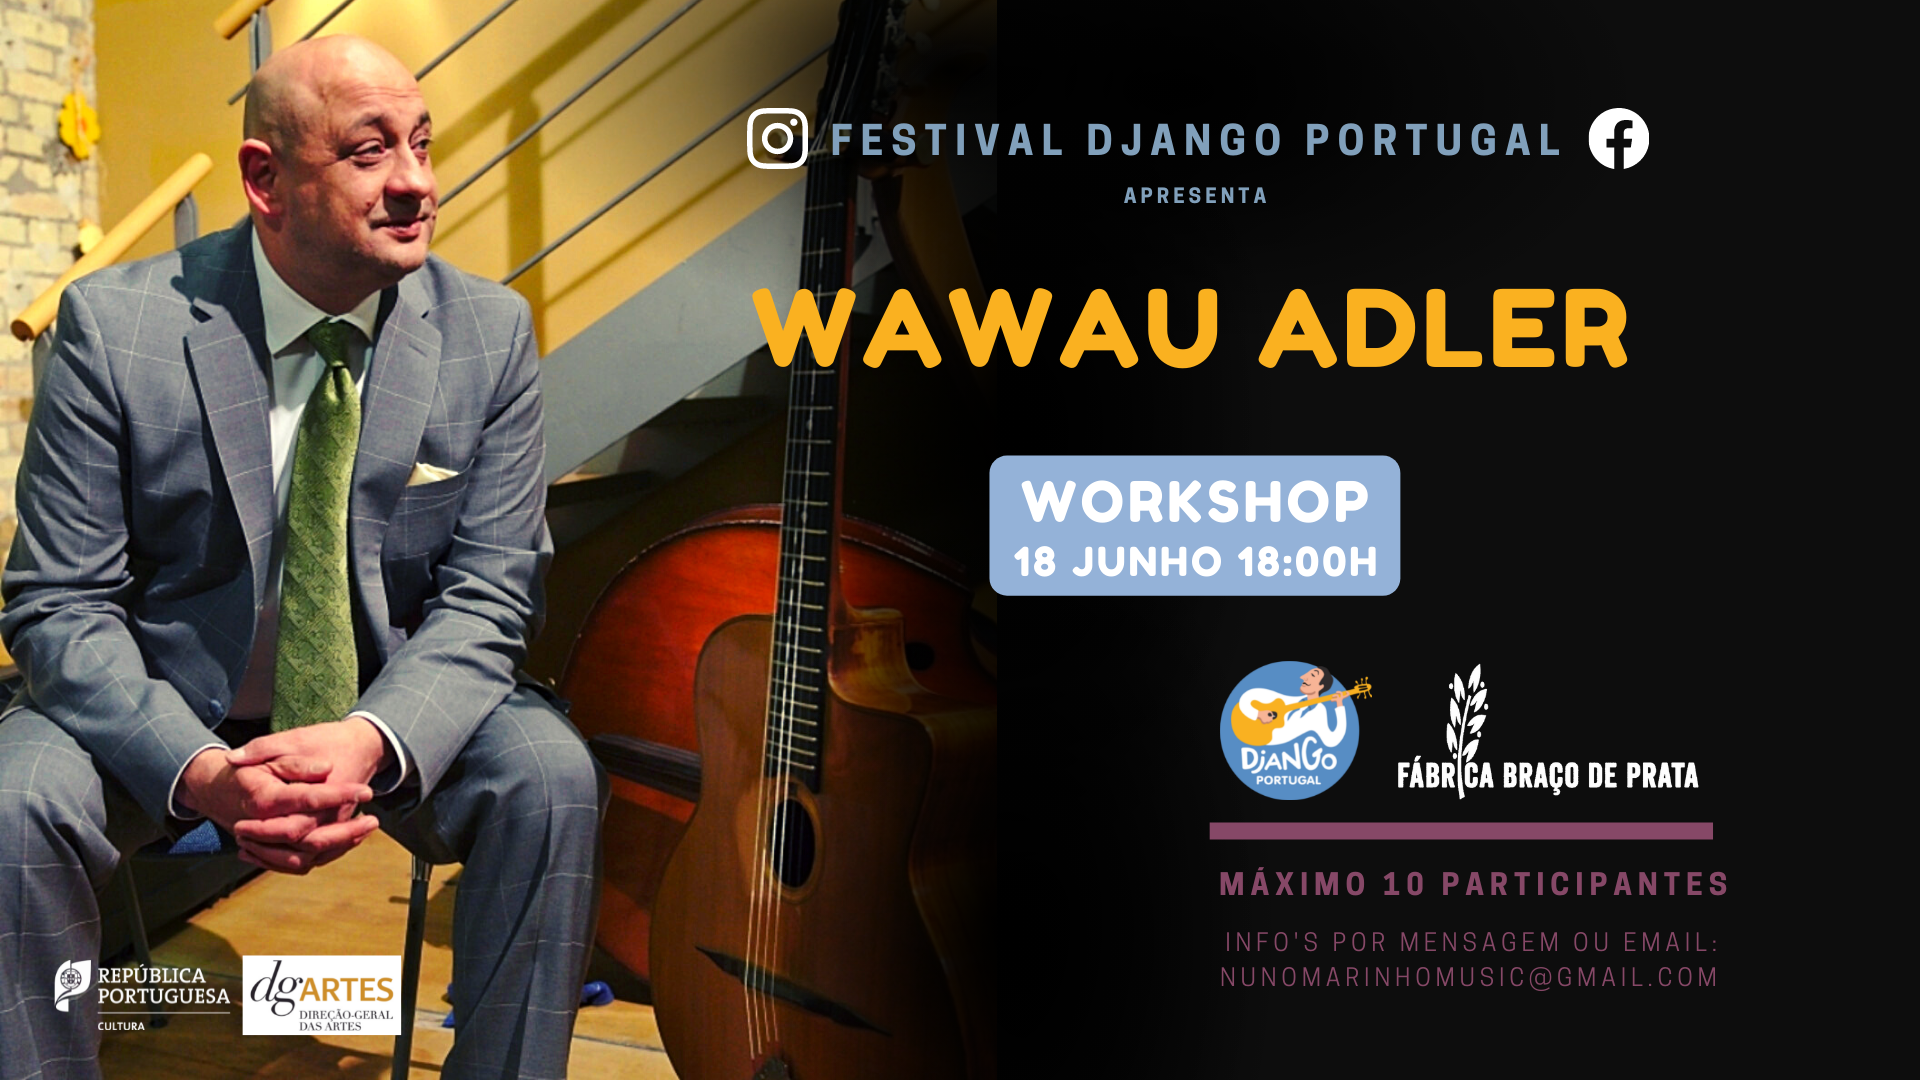 Wawau_Adler_Workshop_Festival_Django_Portugal